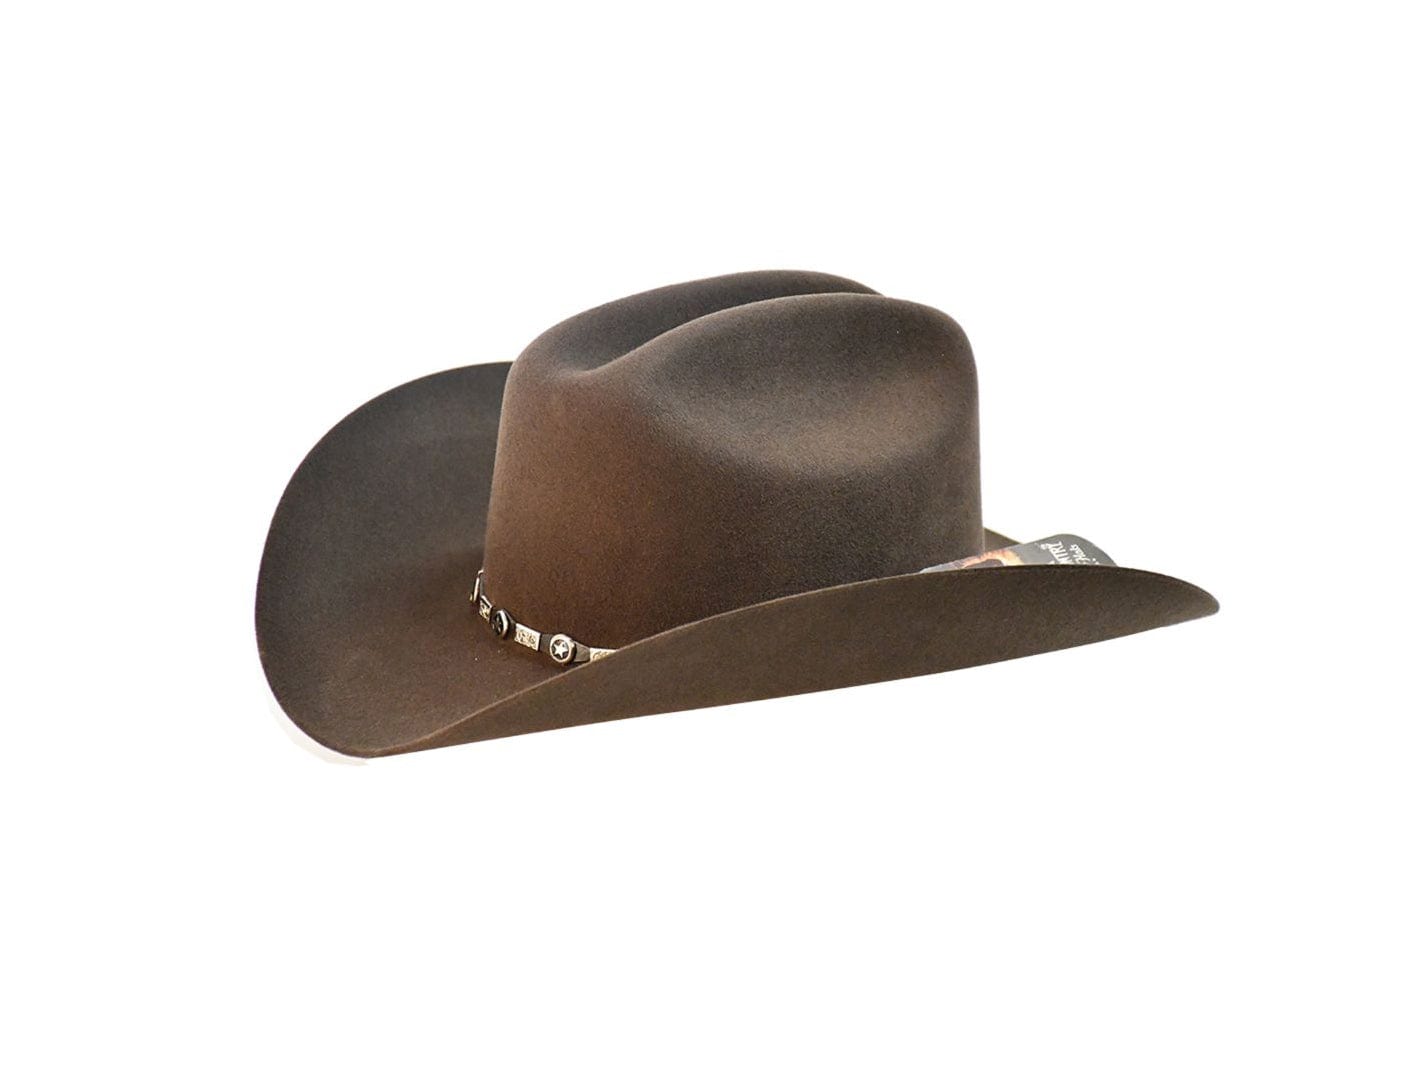 Exclusive "Sinaloa" Texas Country Western Felt Cowboy Hat Dark Brown